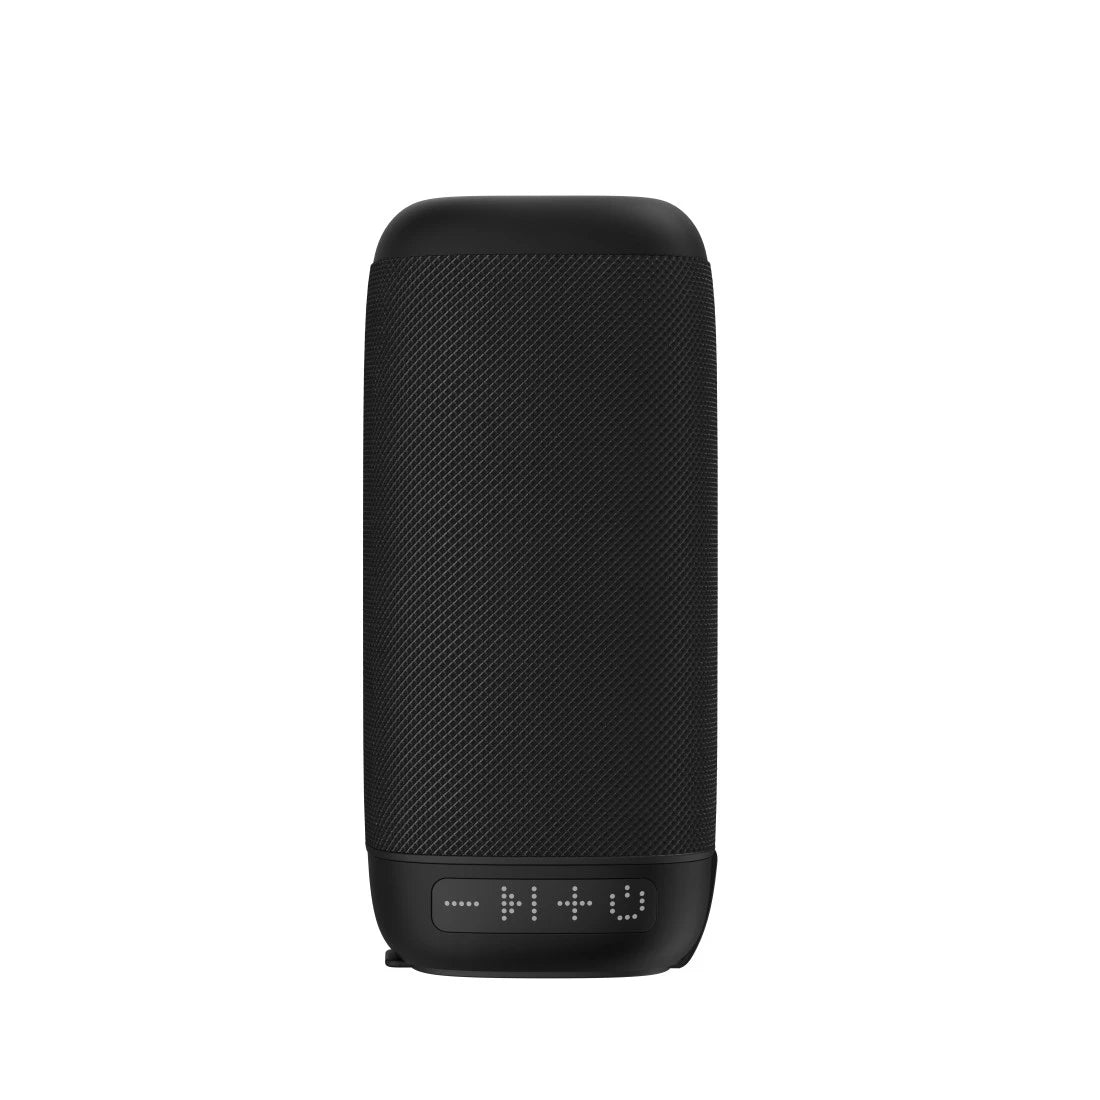 HamaTube 3.0 3W Bluetooth Loudspeaker - Black | 497932 from Hama - DID Electrical